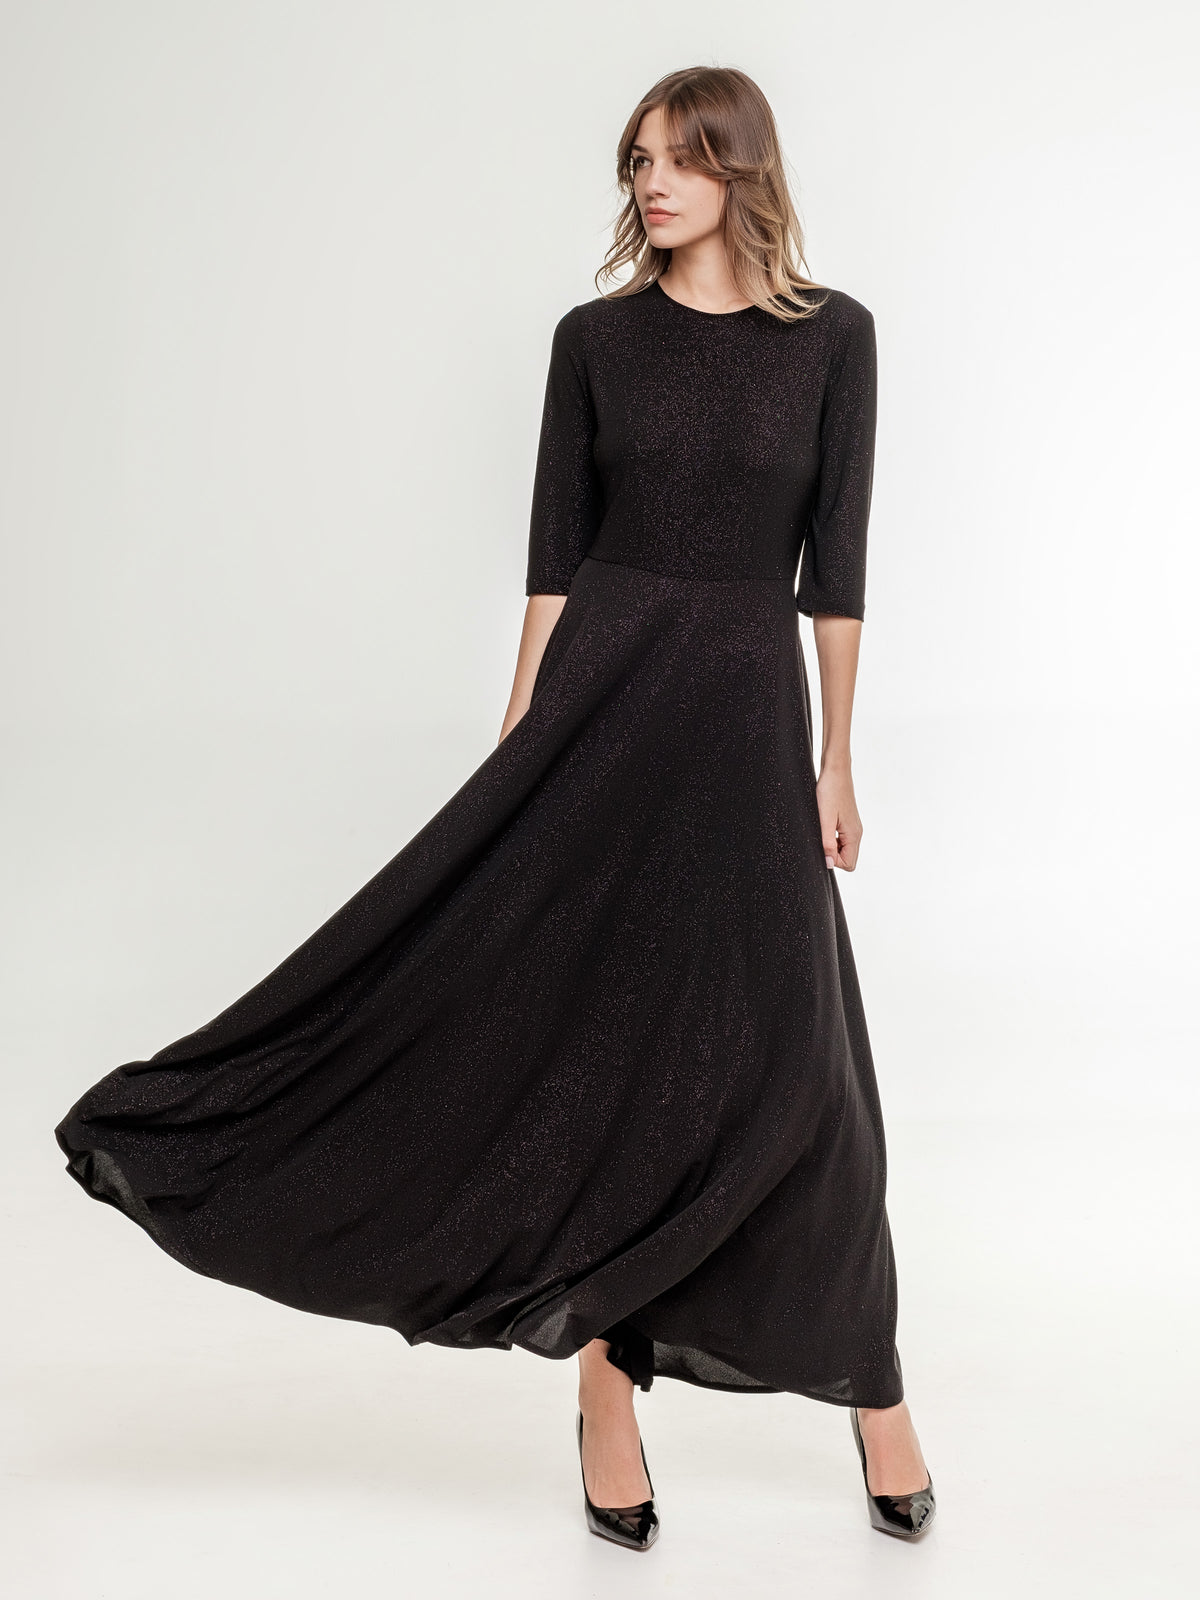 black glossy long dress medium long sleeves wide skirt with underlining 